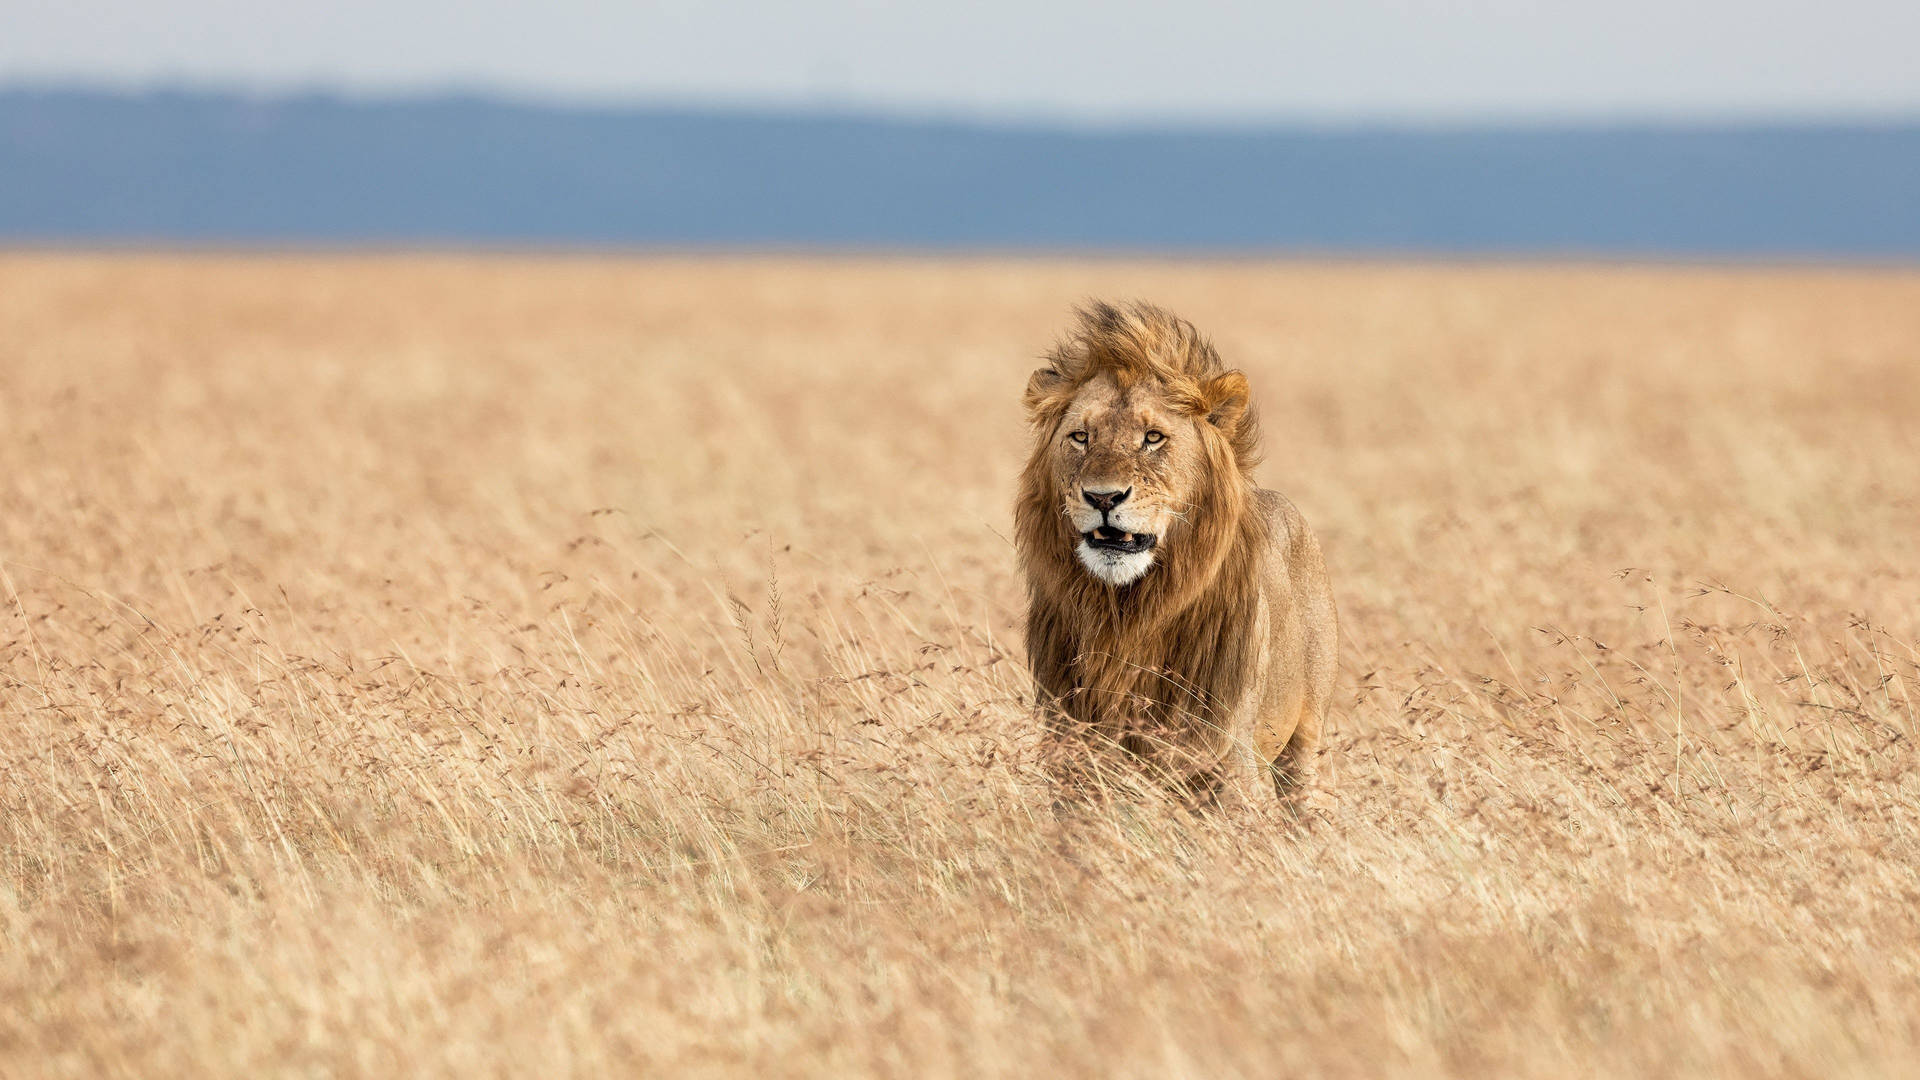 Lion In Africa Focus Shot Background